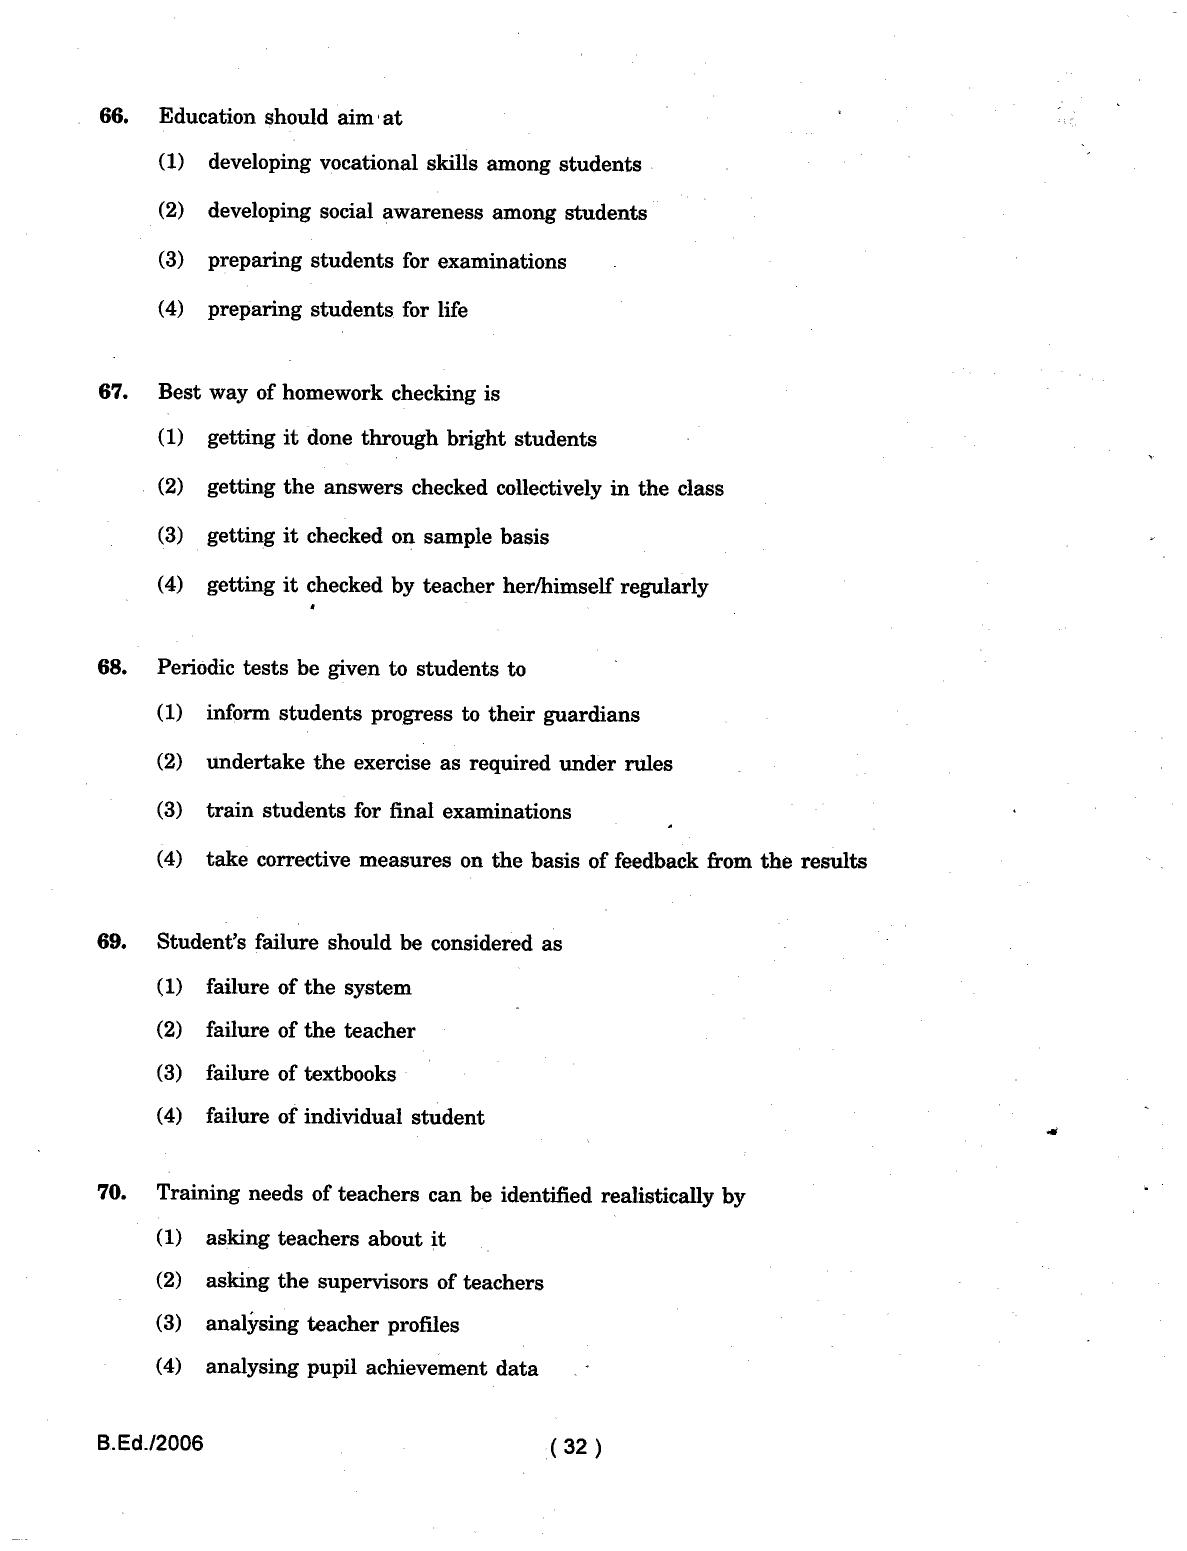 IGNOU B.Ed 2006 Question Paper - Page 32